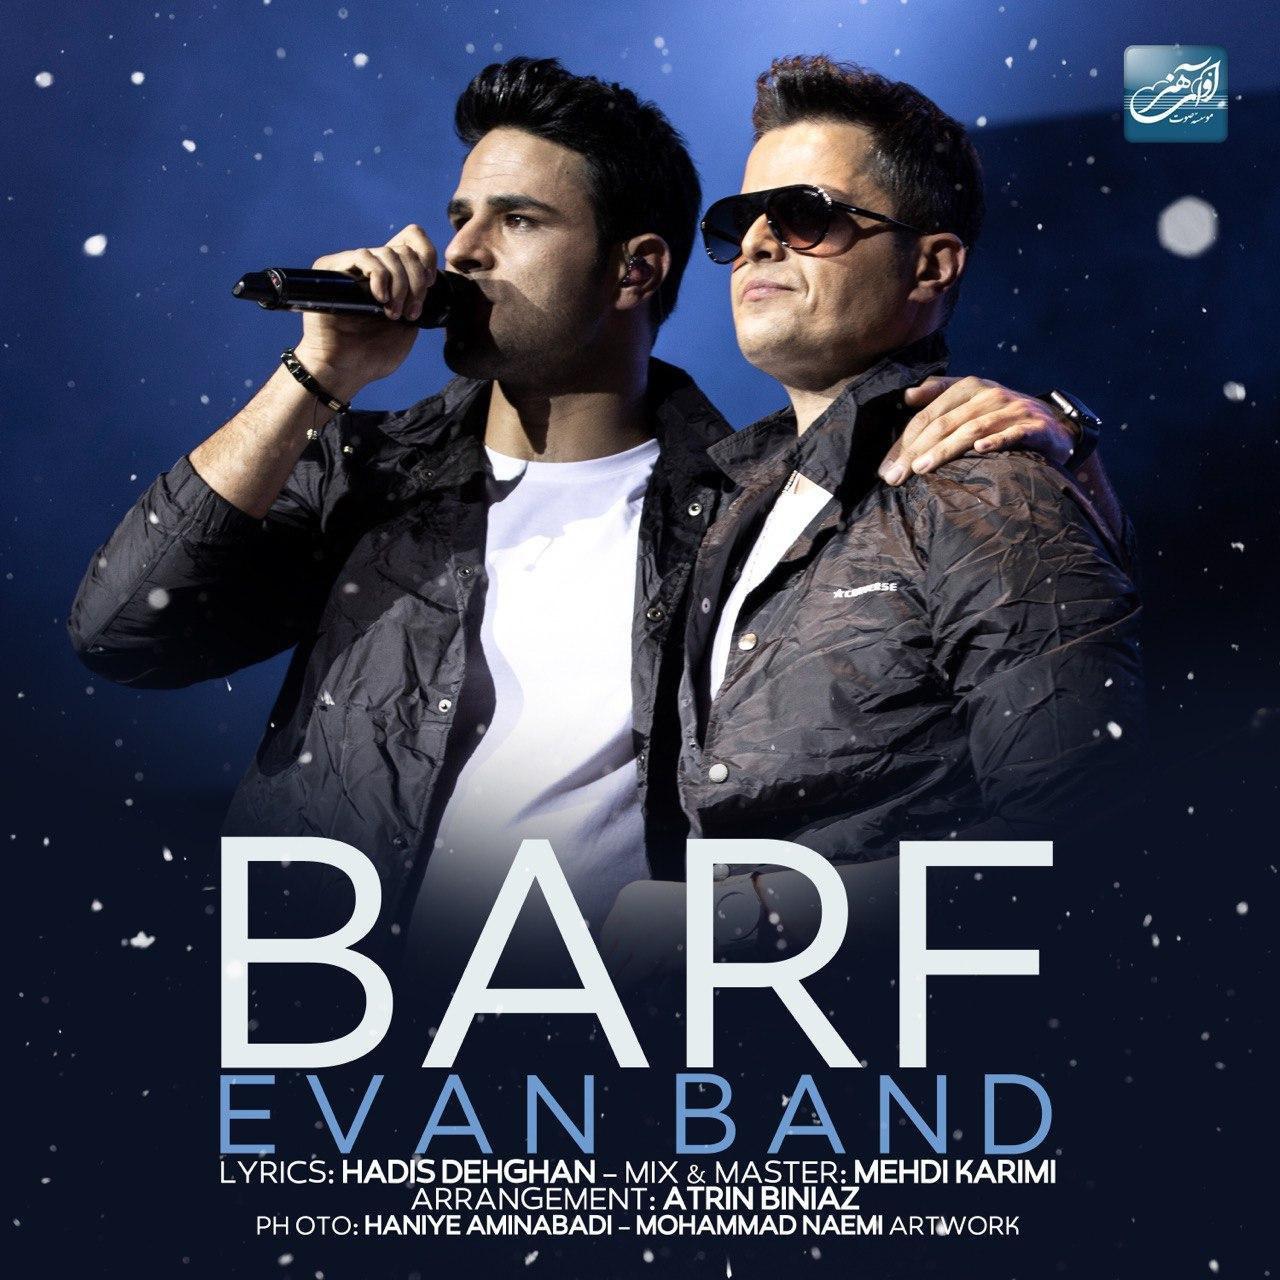 Evan Band – Barf